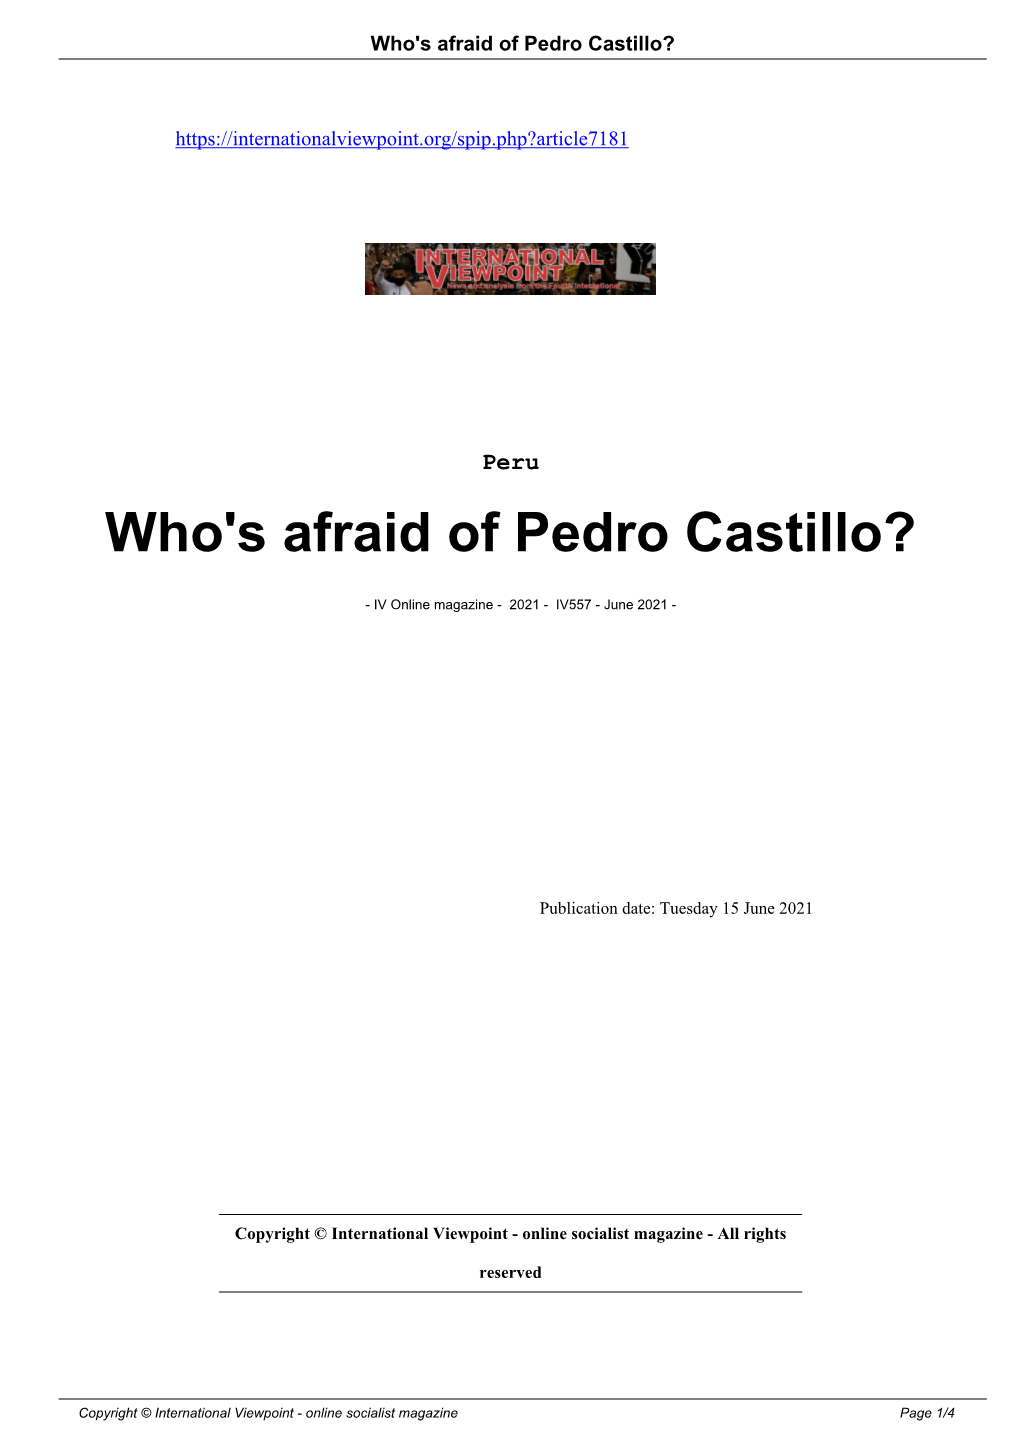 Who's Afraid of Pedro Castillo?